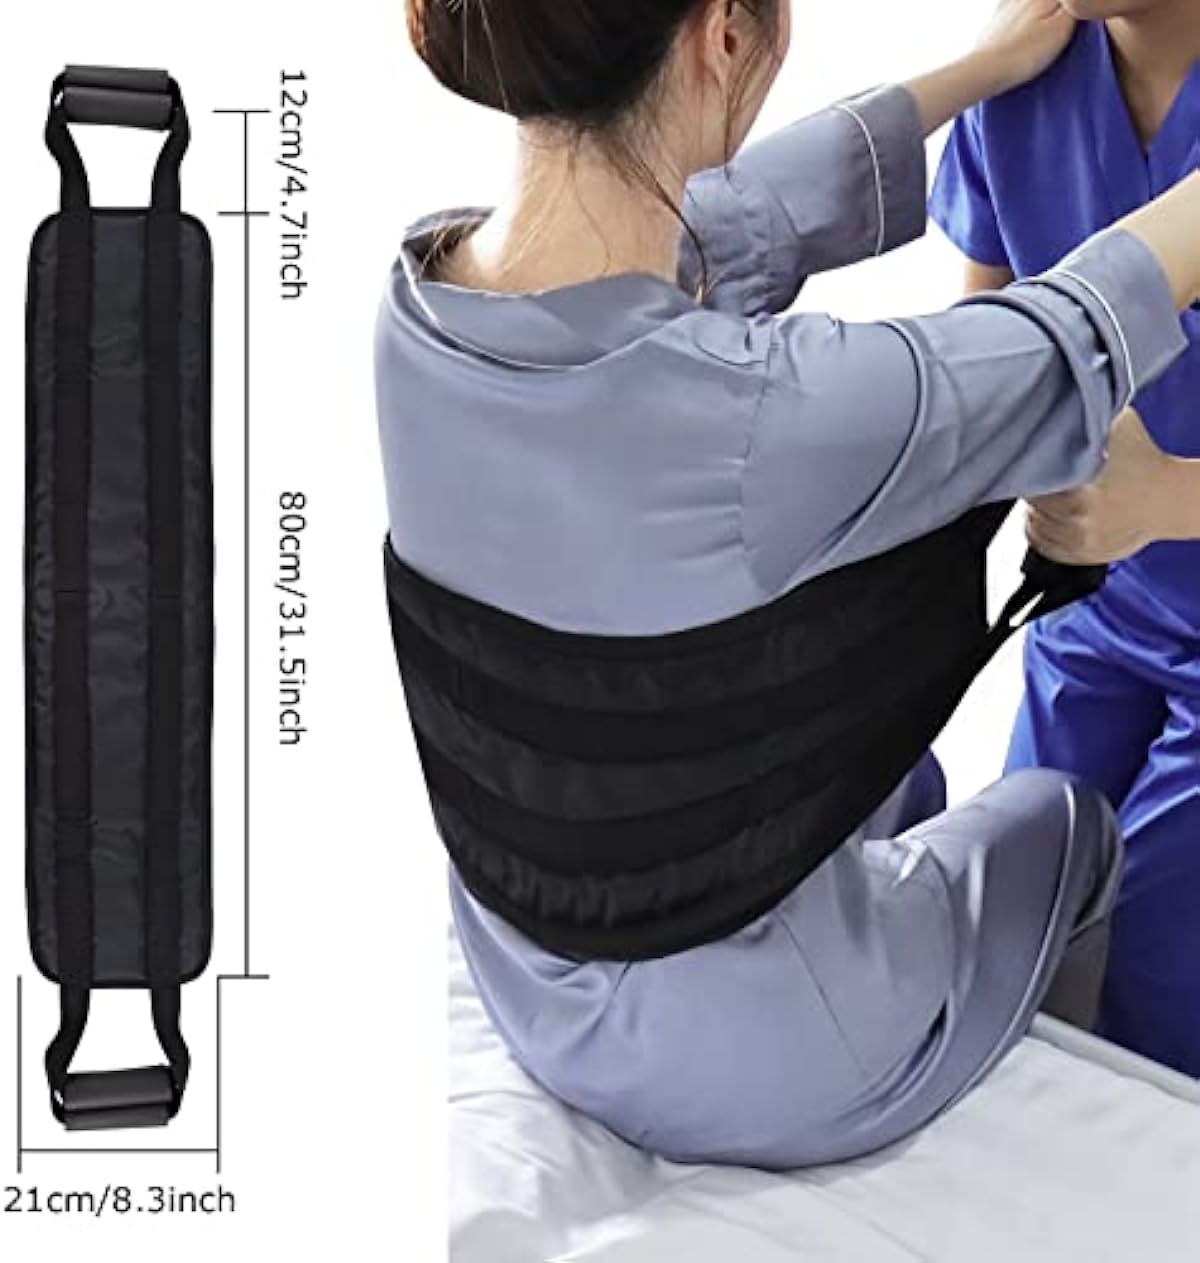 YHK Padded Bed Transfer Nursing Sling for Patient，Transfer Sling for Lifting Seniors（31.5 in），Nursing Transfer Sling Handle Back Lift Mobility Belt for Patient Care， for Medical Lifting Assistance